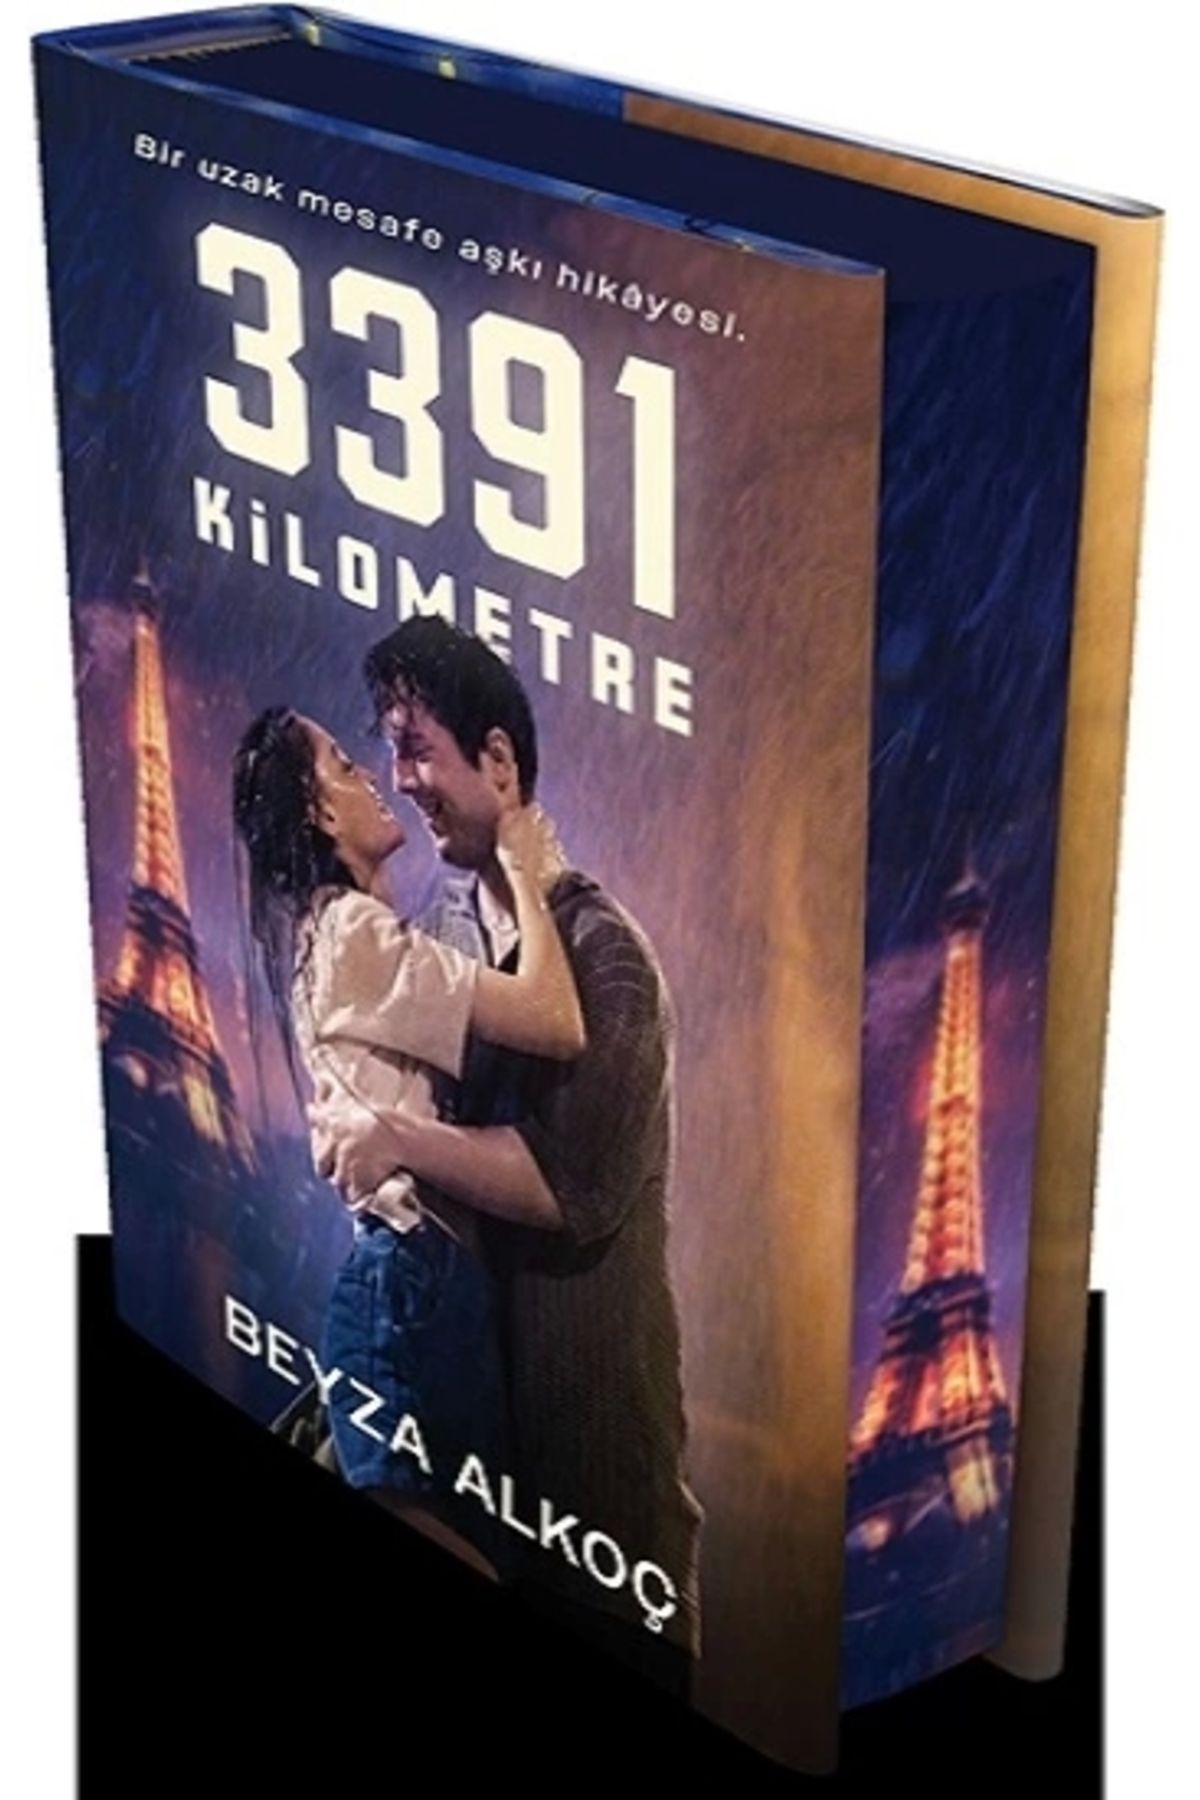 İndigo Kitap 3391 Kilometre Özel Baskı (CİLTLİ)